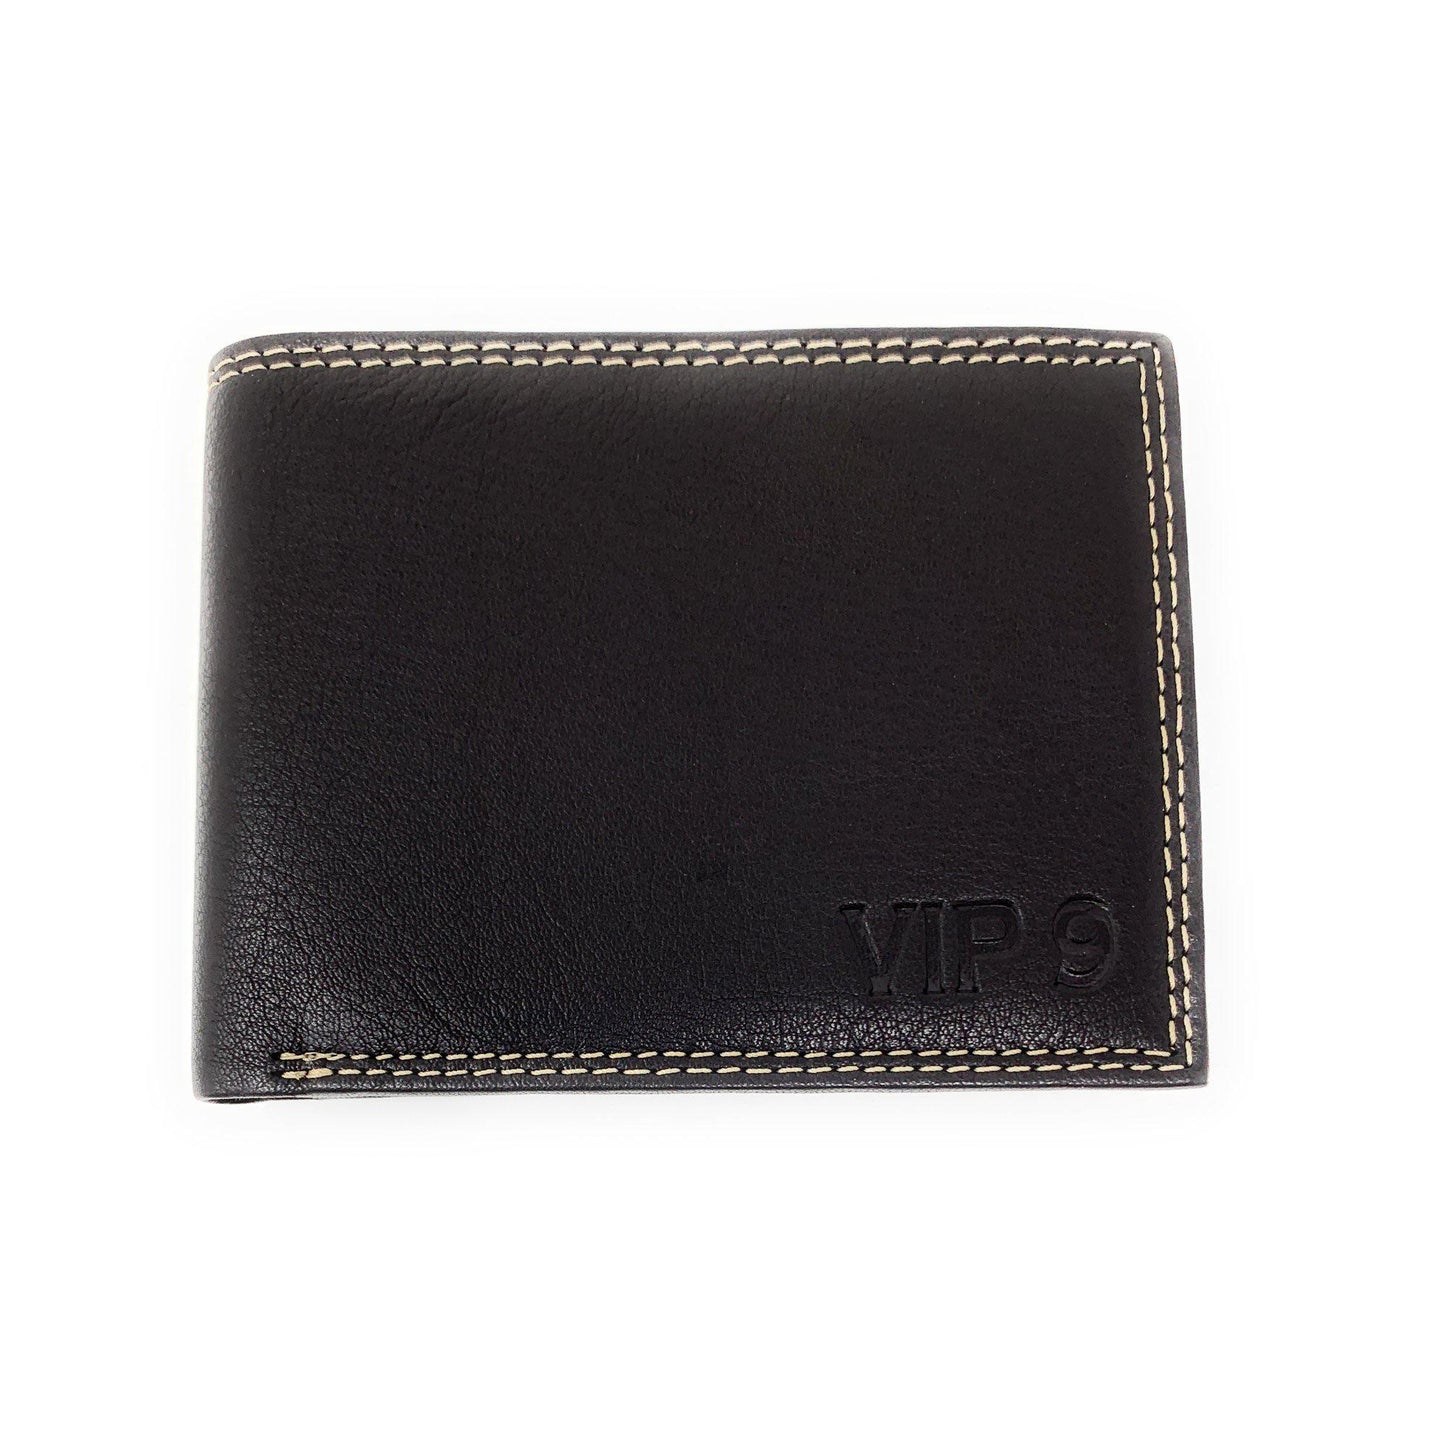 Empire Cove VIP Classic Genuine Leather Slim Bifold Wallets Flip Up ID-Wallets-Empire Cove-Black-Casaba Shop